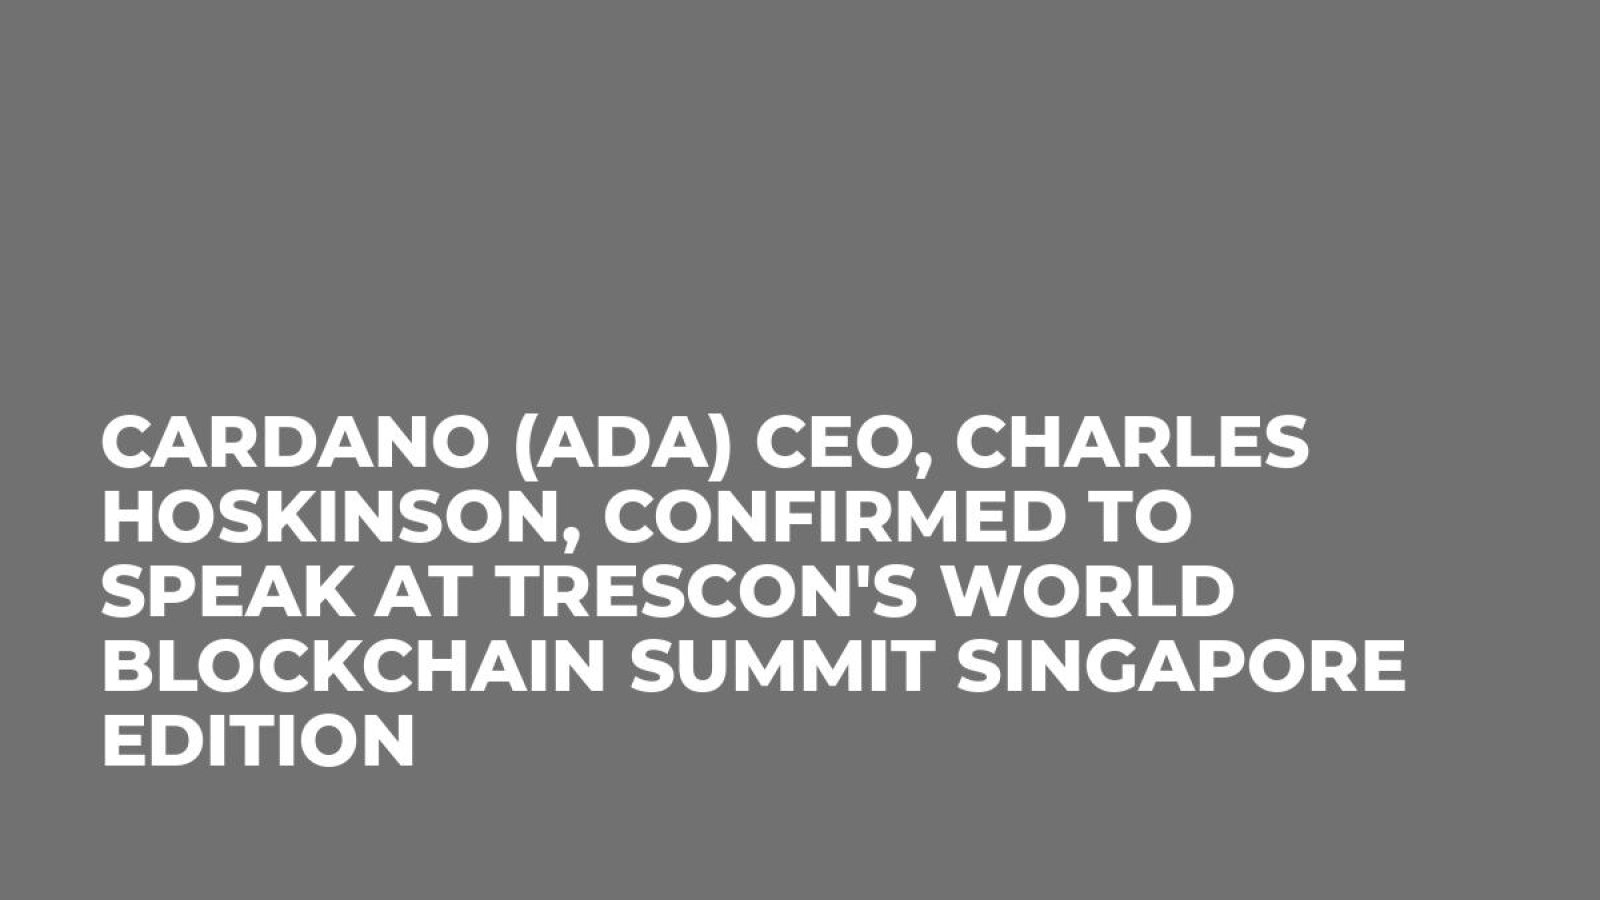 Cardano (ADA) CEO, Charles Hoskinson, confirmed to speak at Trescon's World Blockchain Summit Singapore Edition